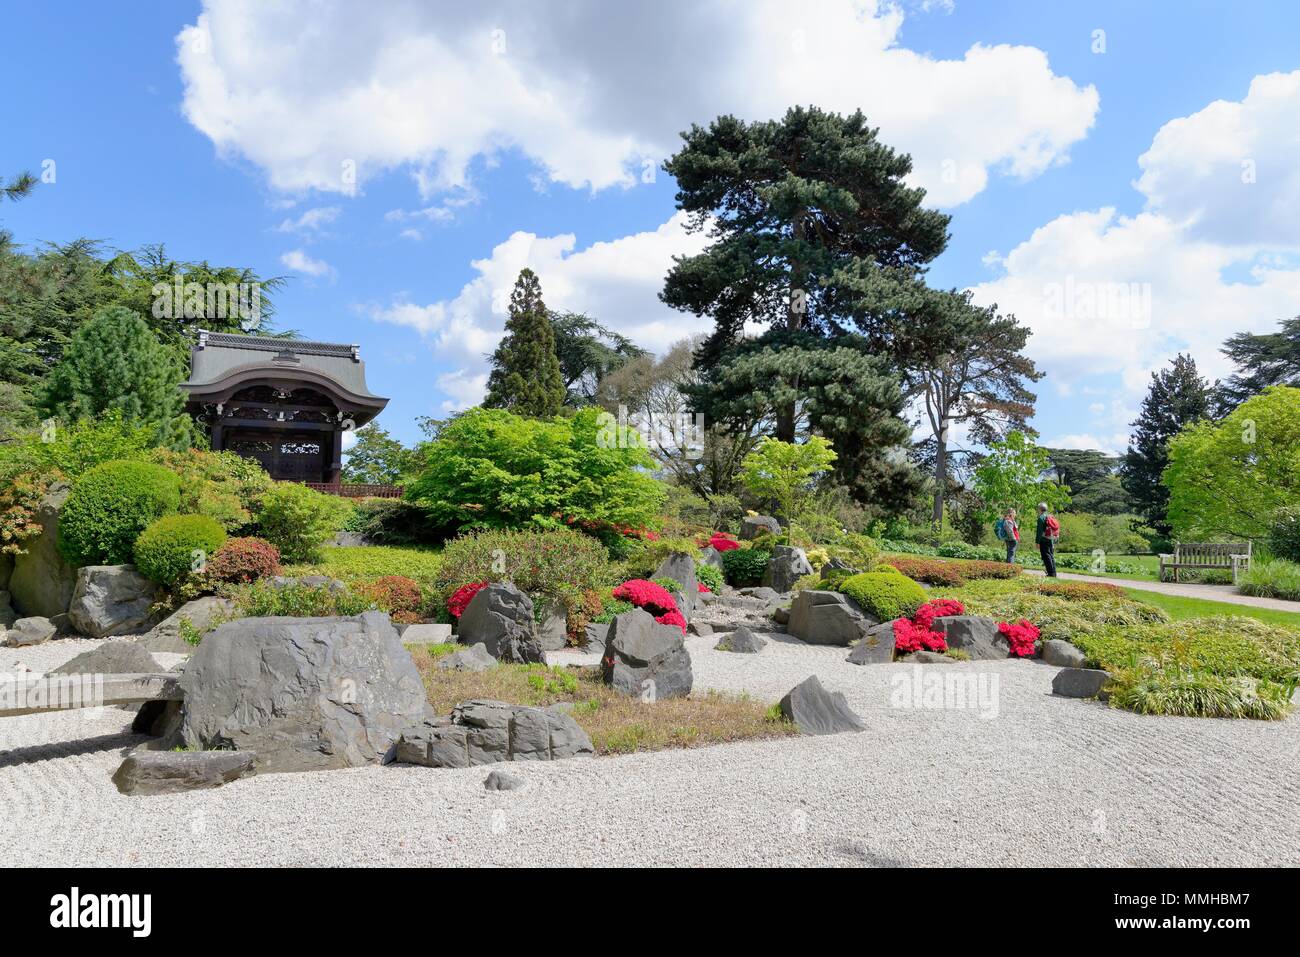 The Japanese Garden in the Royal Botanic Gardens, Kew Greater London England UK Stock Photo